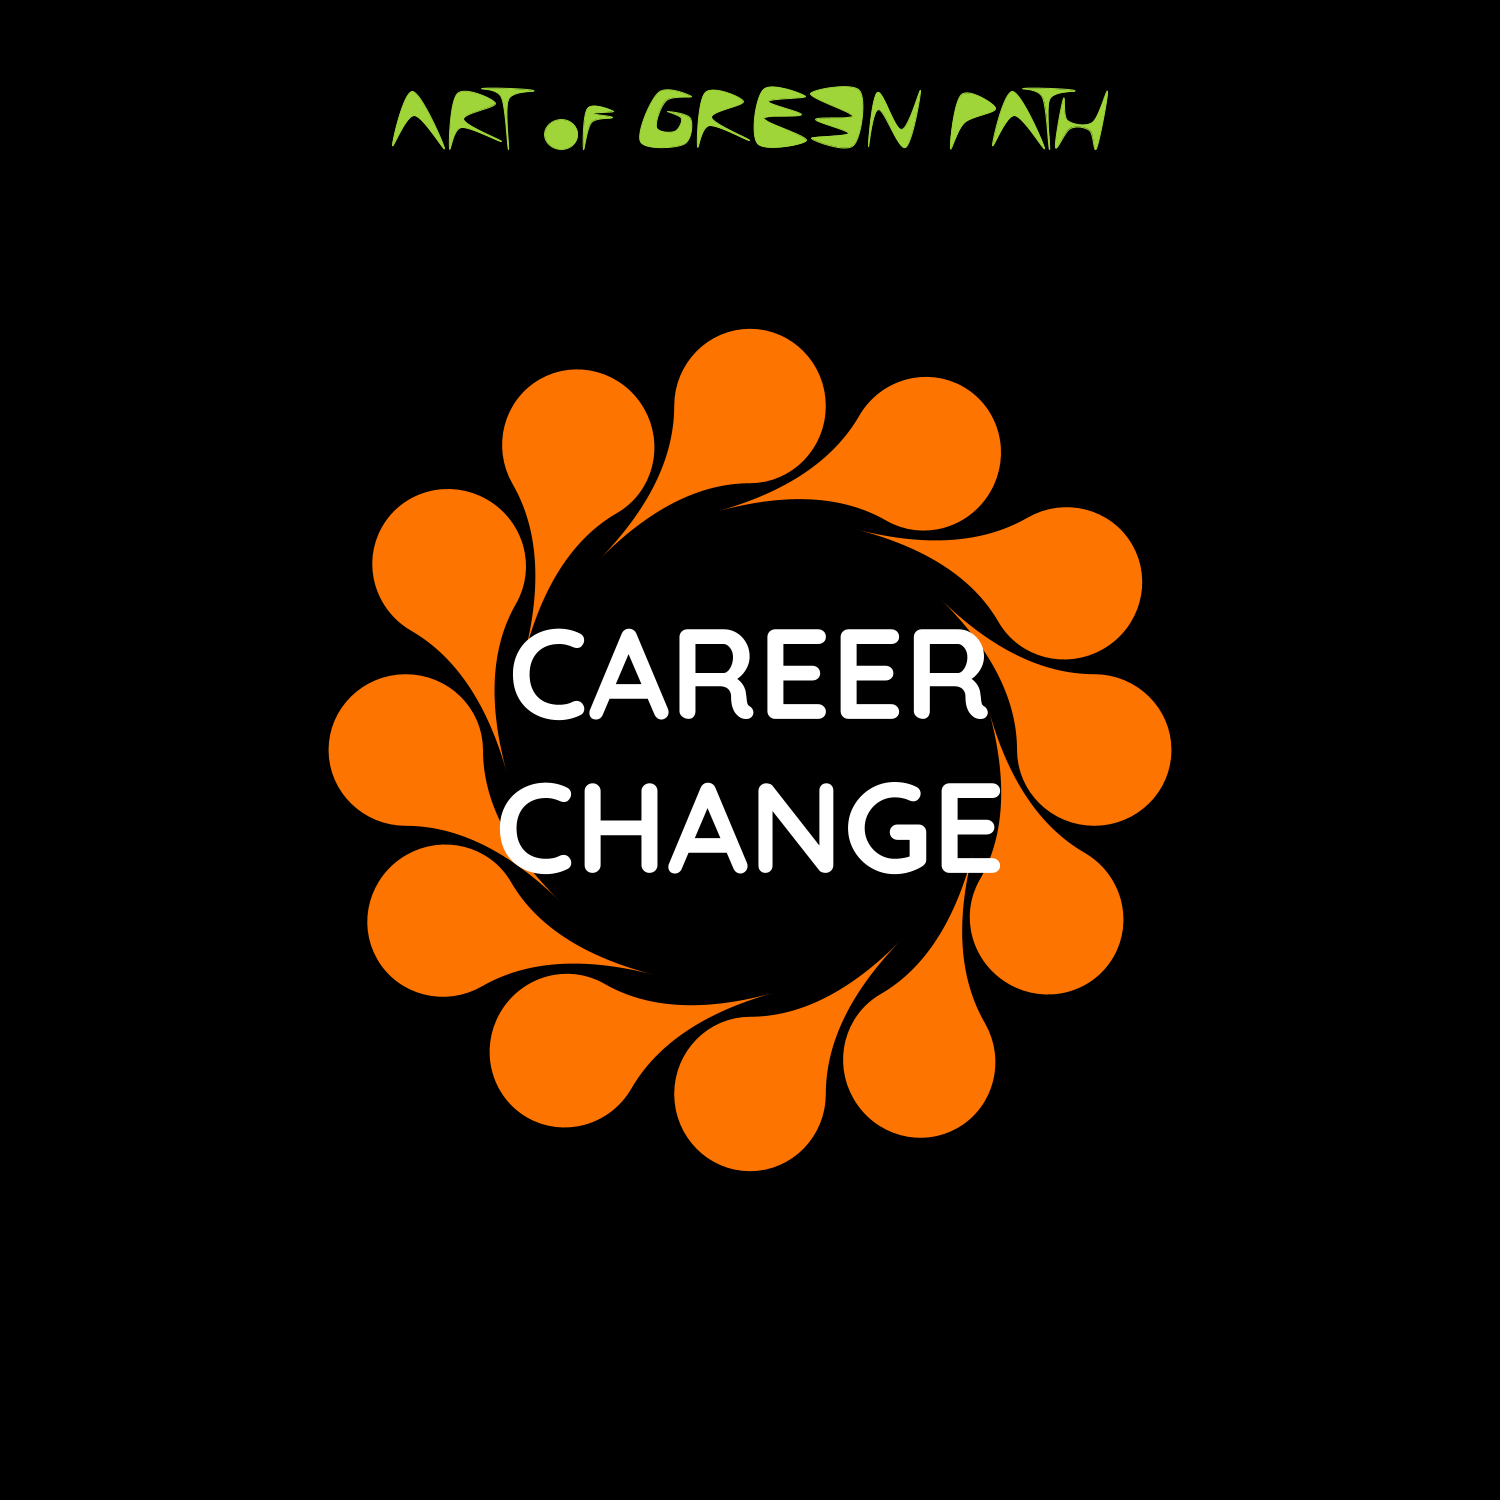 ART OF GREEN PATH - CAREER CHANGE